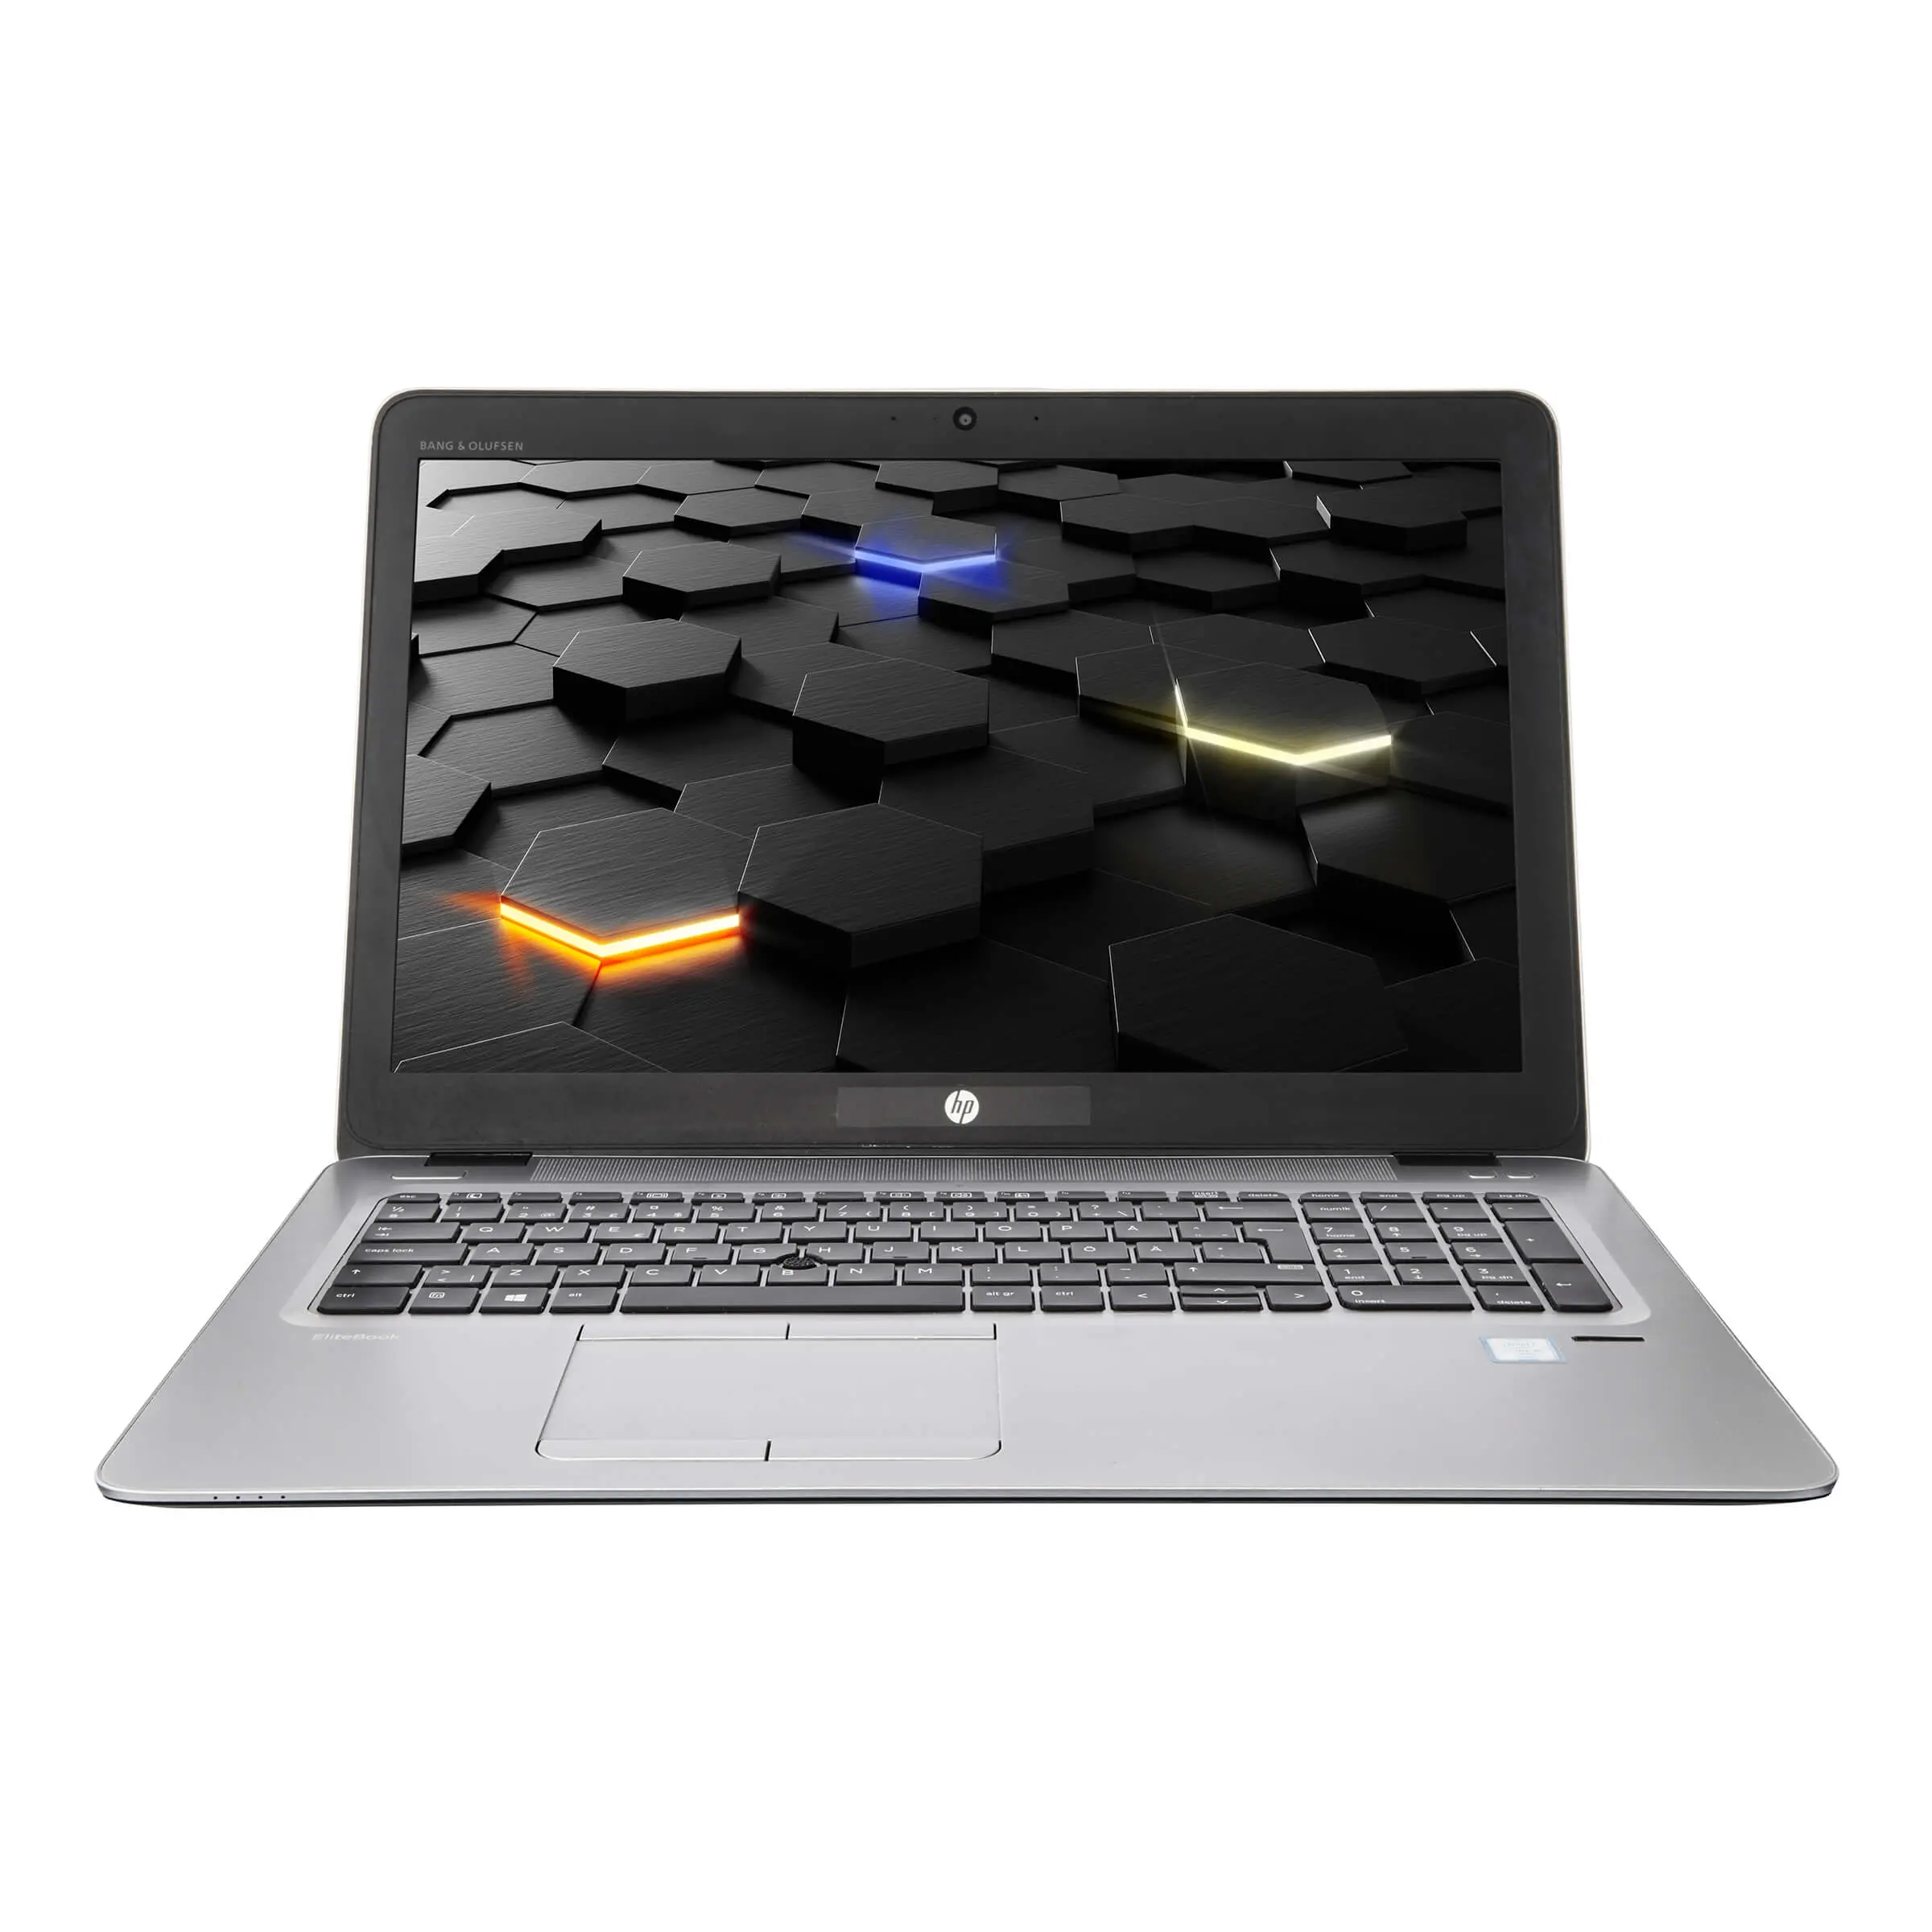 HP EliteBook 850 G3, i5, 15.6 Zoll Full-HD IPS, 32GB, 120GB SSD, Webcam, Windows 10 Pro